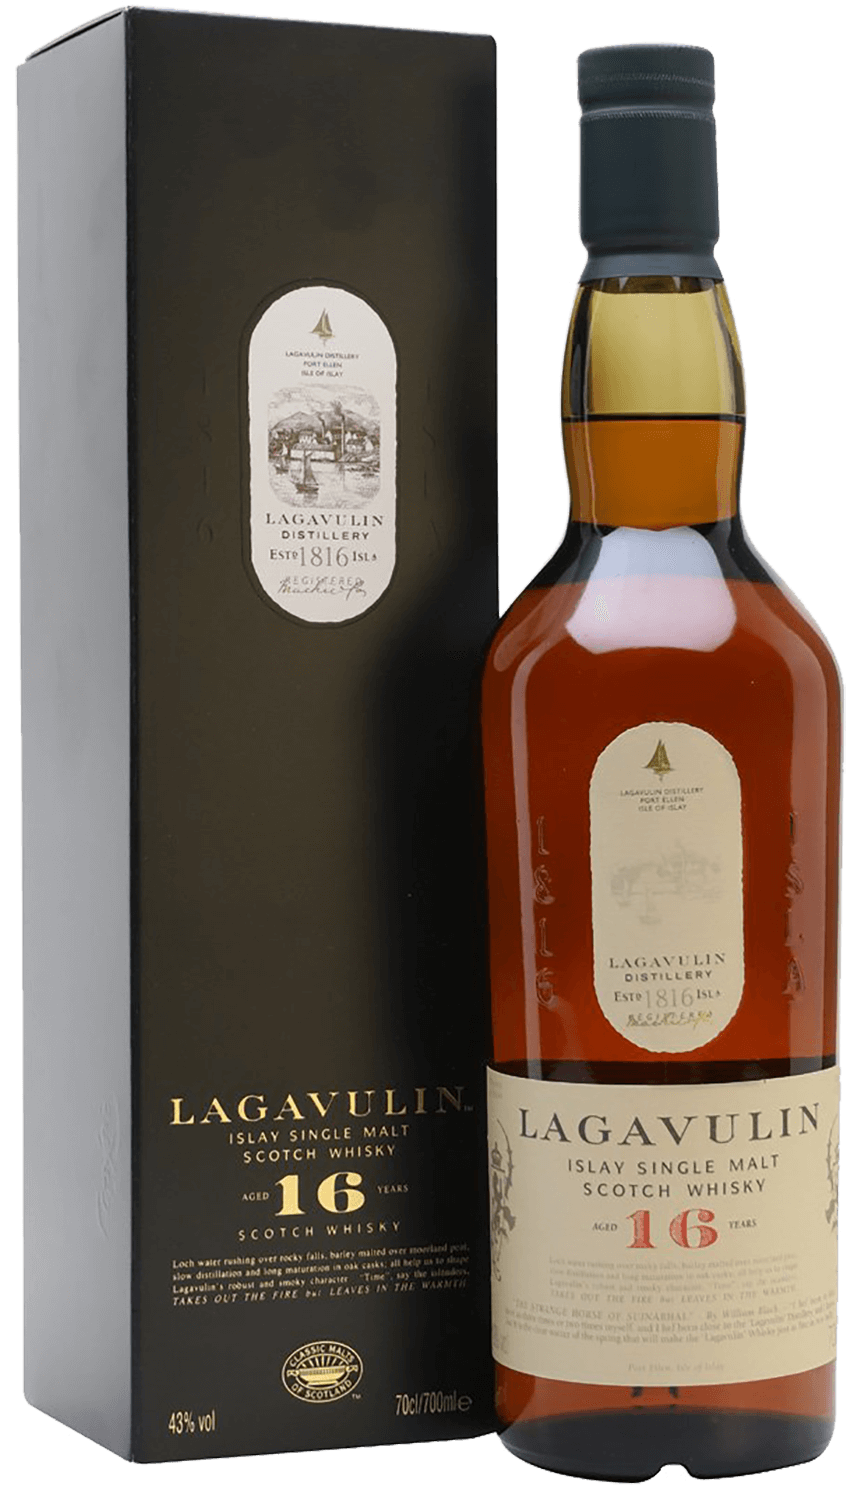 Lagavulin Islay single malt scotch whisky 16 Years Old (gift box) glen turner 12 years old single malt scotch whisky gift box